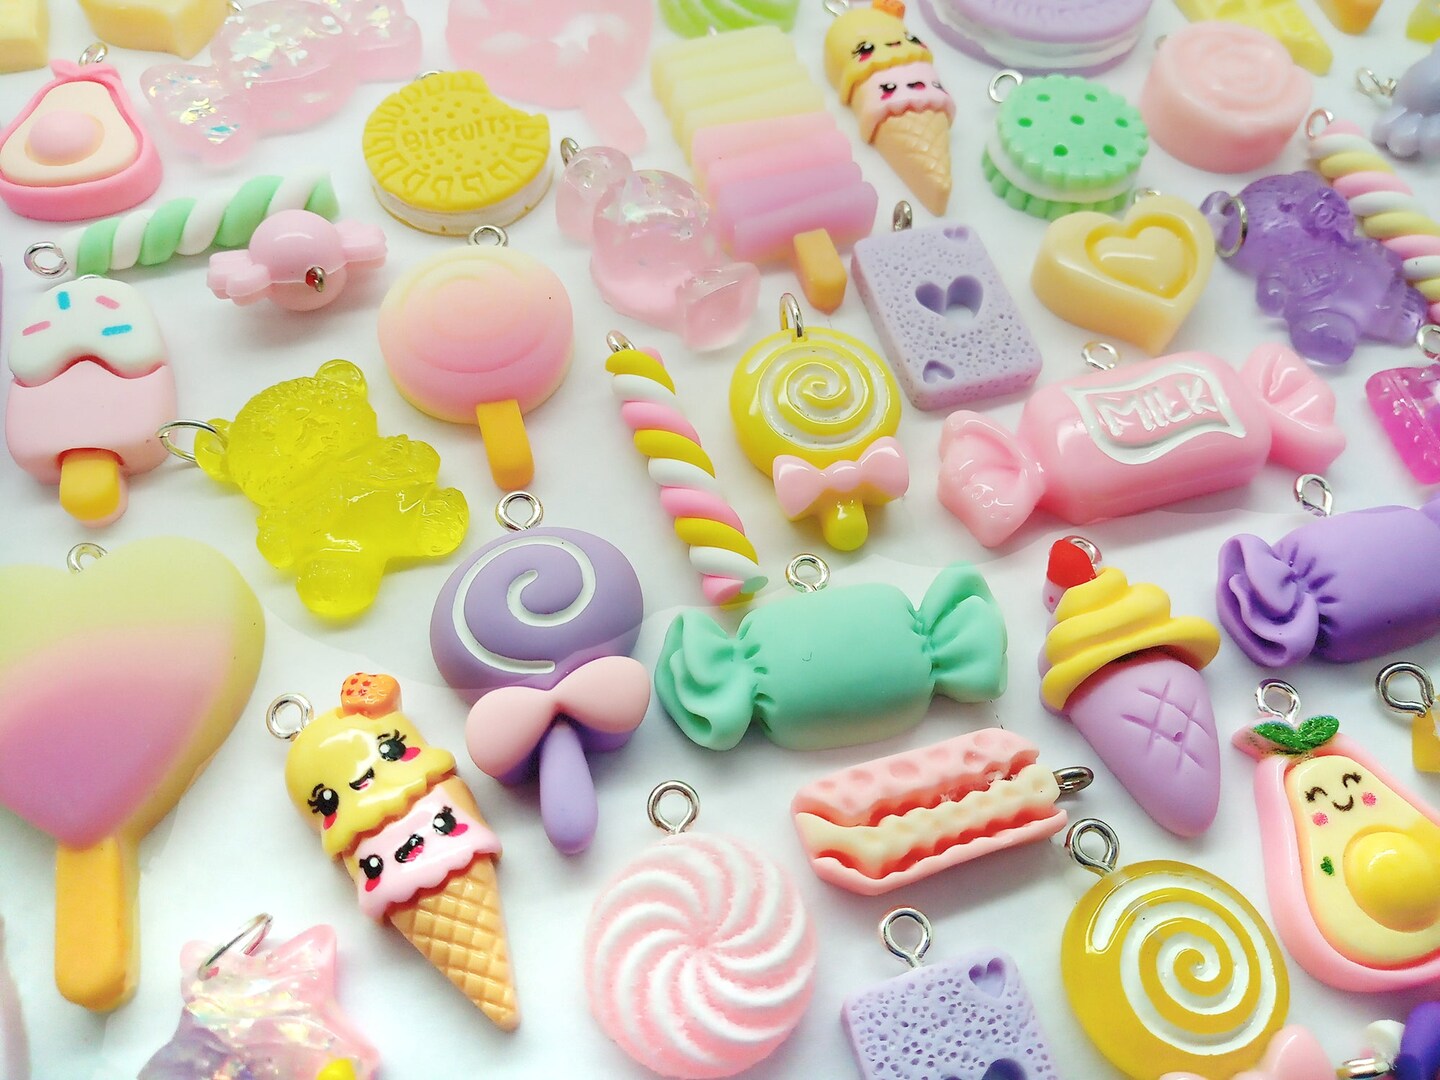 Pastel Food Charm Assortment, 20 pc Kawaii Candy and Sweet Pendants, Adorabilities